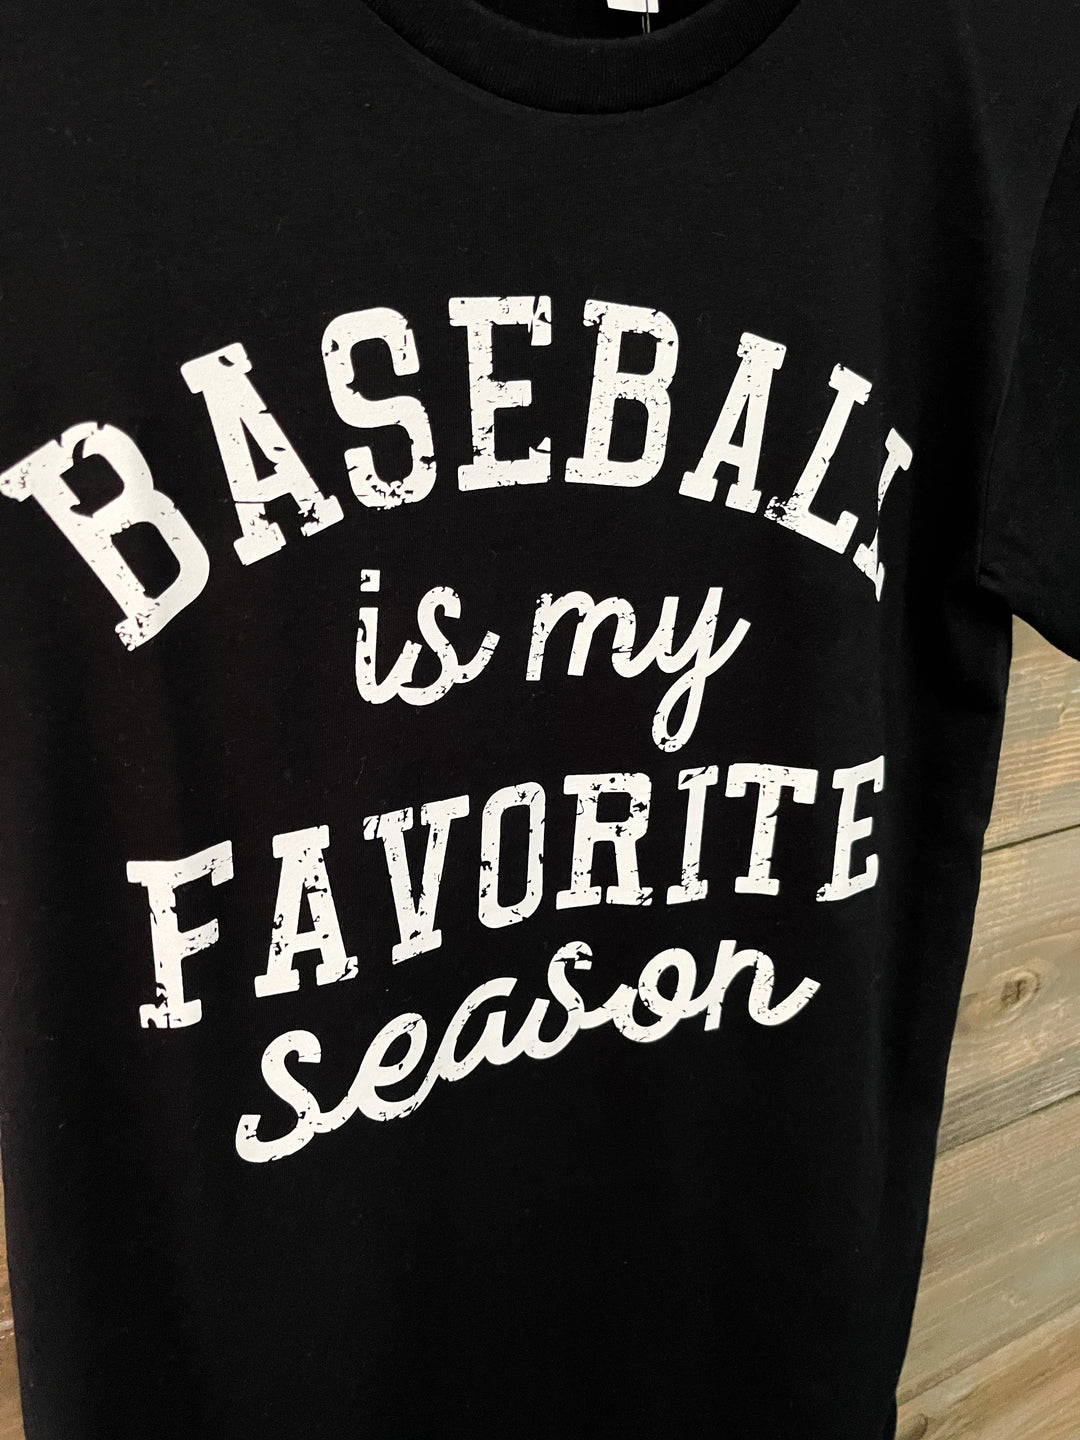 Baseball Is My Favorite Season Tee